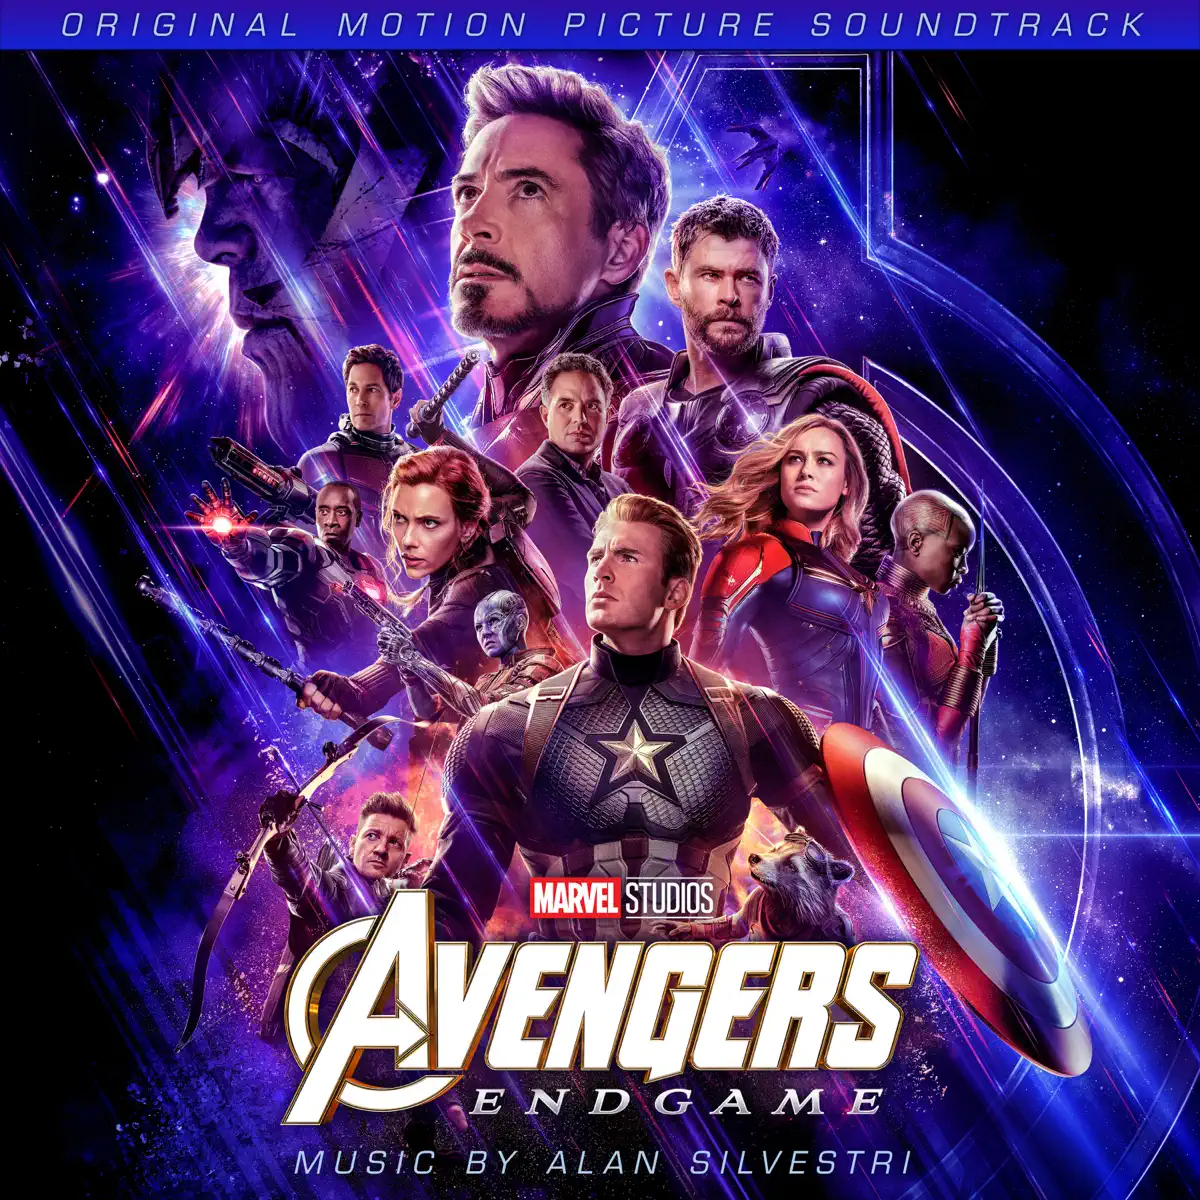 Alan Silvestri - 复仇者联盟4: 终局之战 Avengers: Endgame (Original Motion Picture Soundtrack) (2019) [iTunes Plus AAC M4A]-新房子